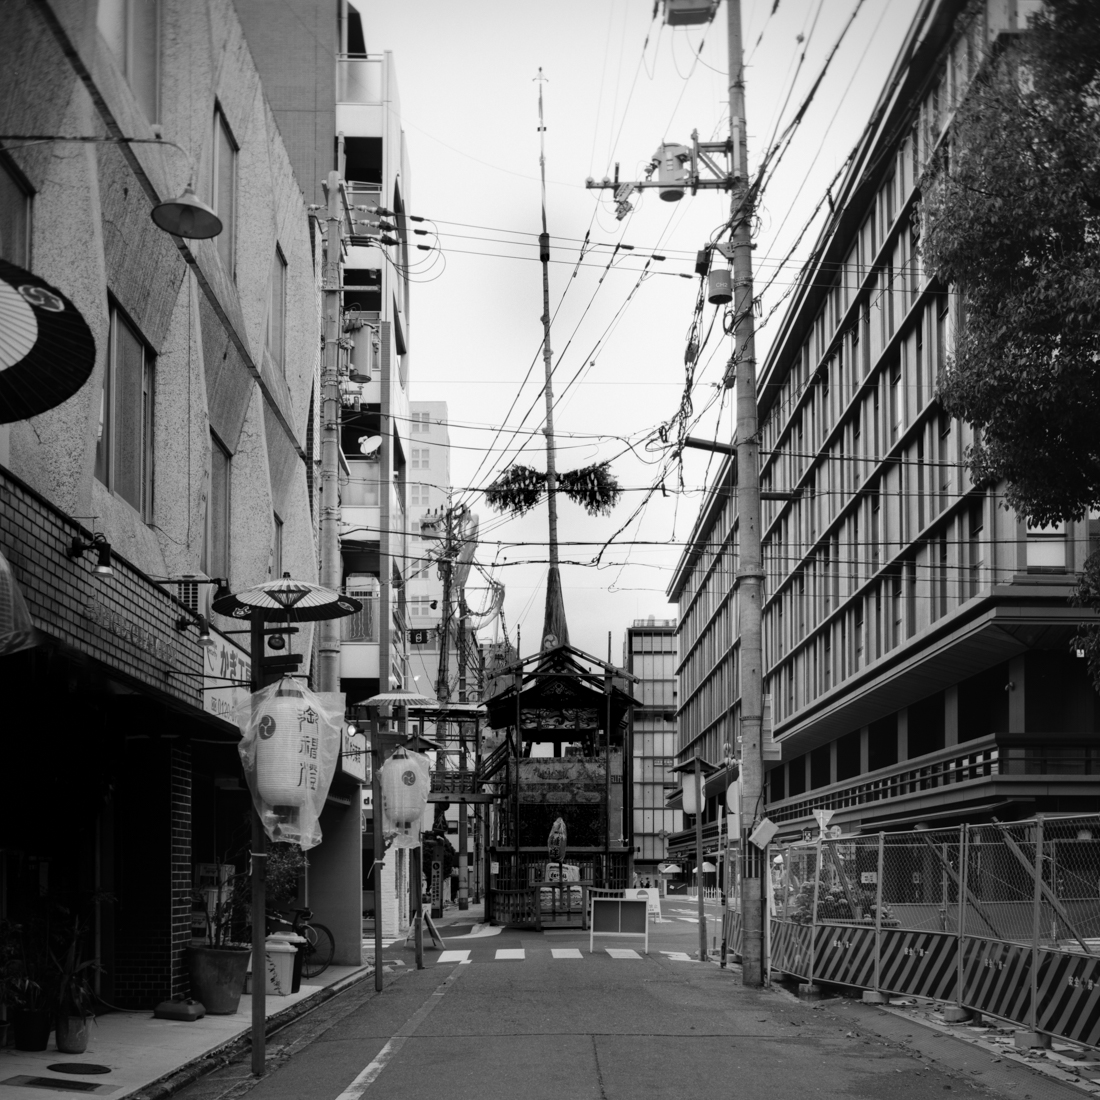 thumbnail “Yamahoko” in the Modern City